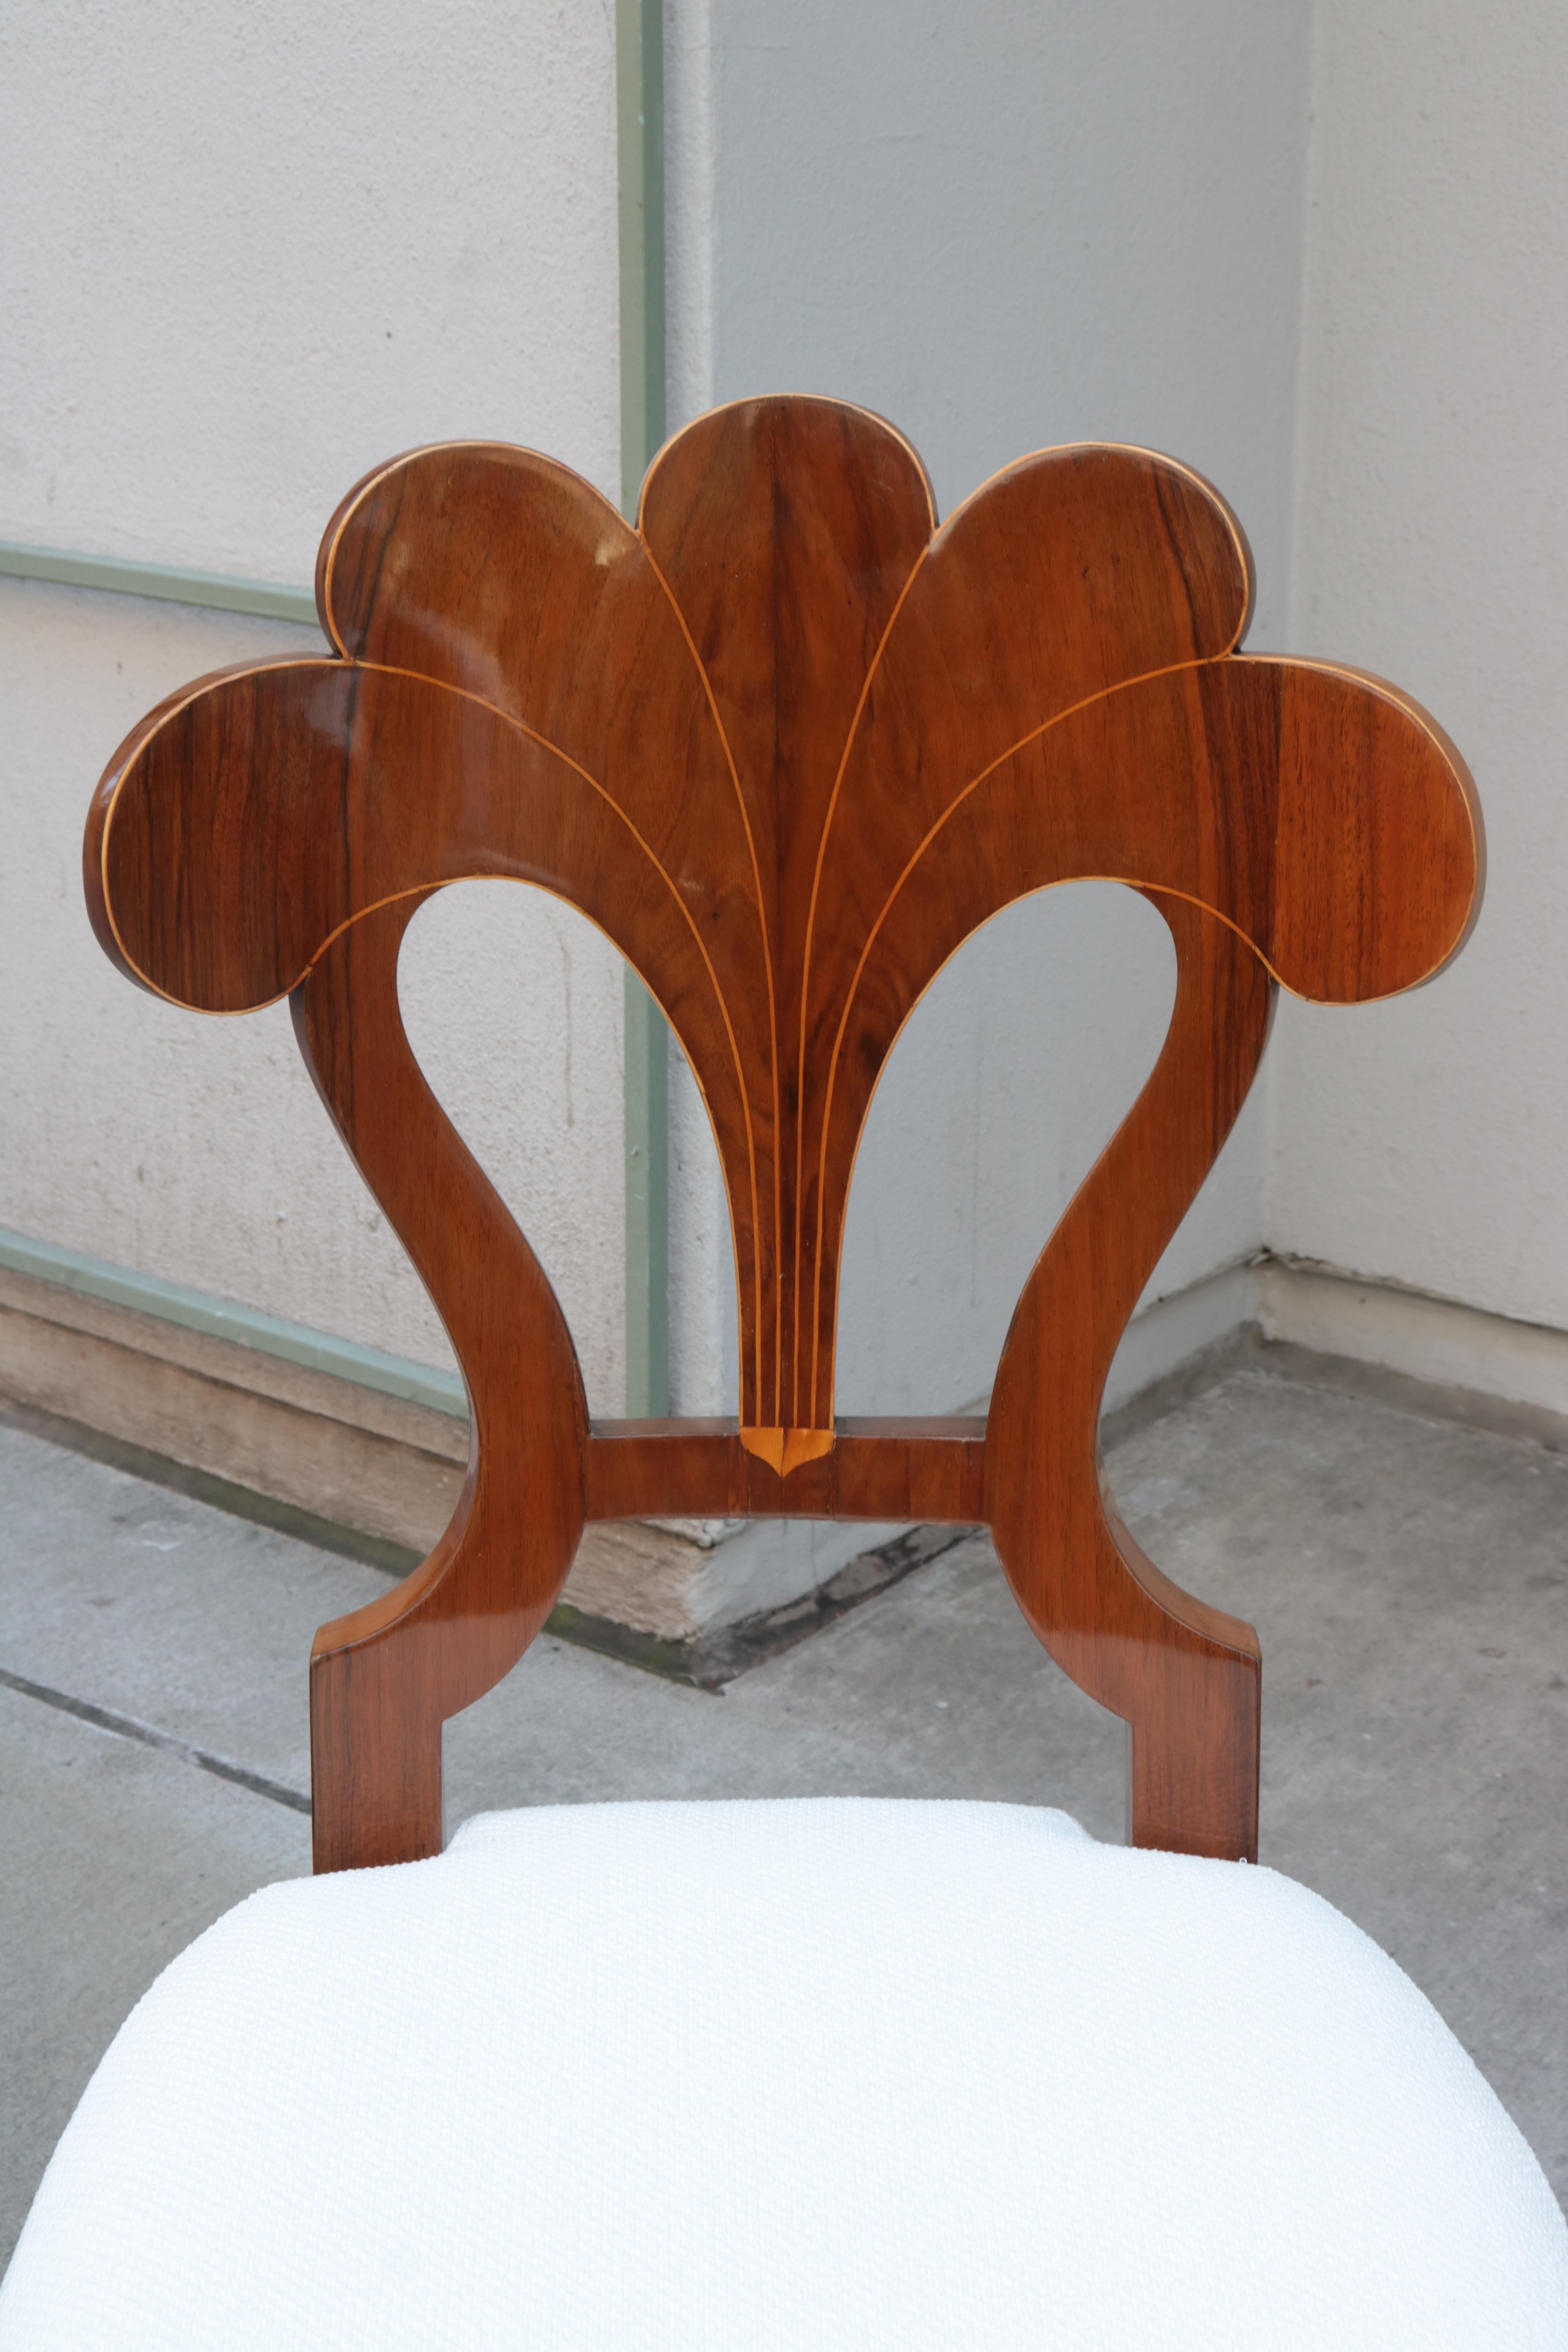 A fine single Biedermeier side chair.
Walnut with fruitwood inlay details.
      